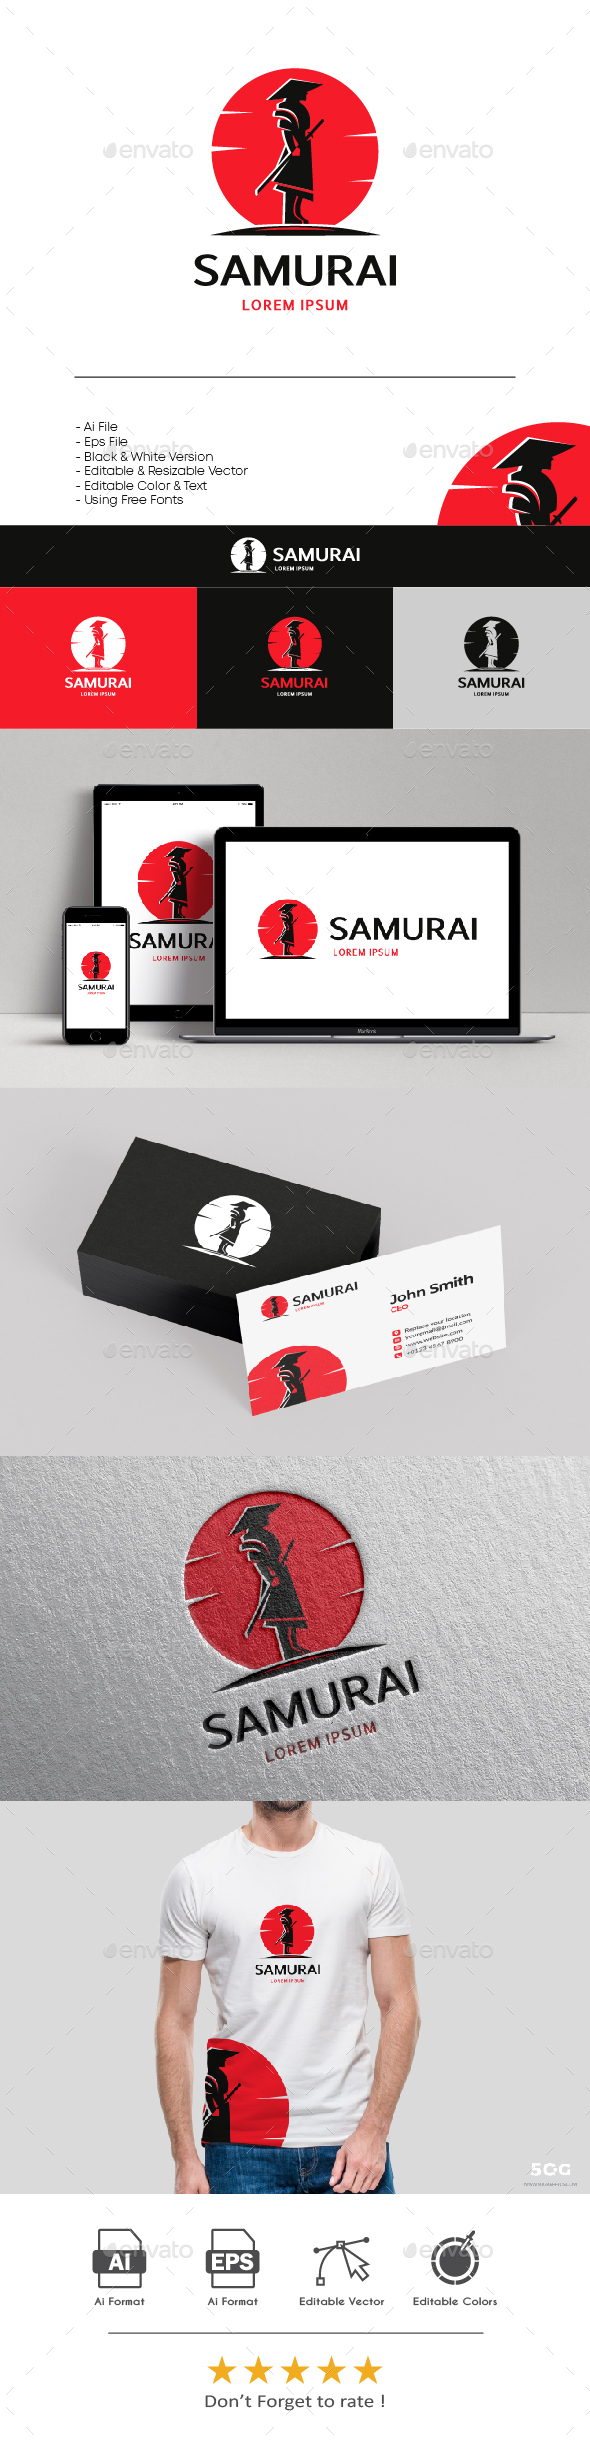 Samurai Logo - SILHOUETTE STYLE